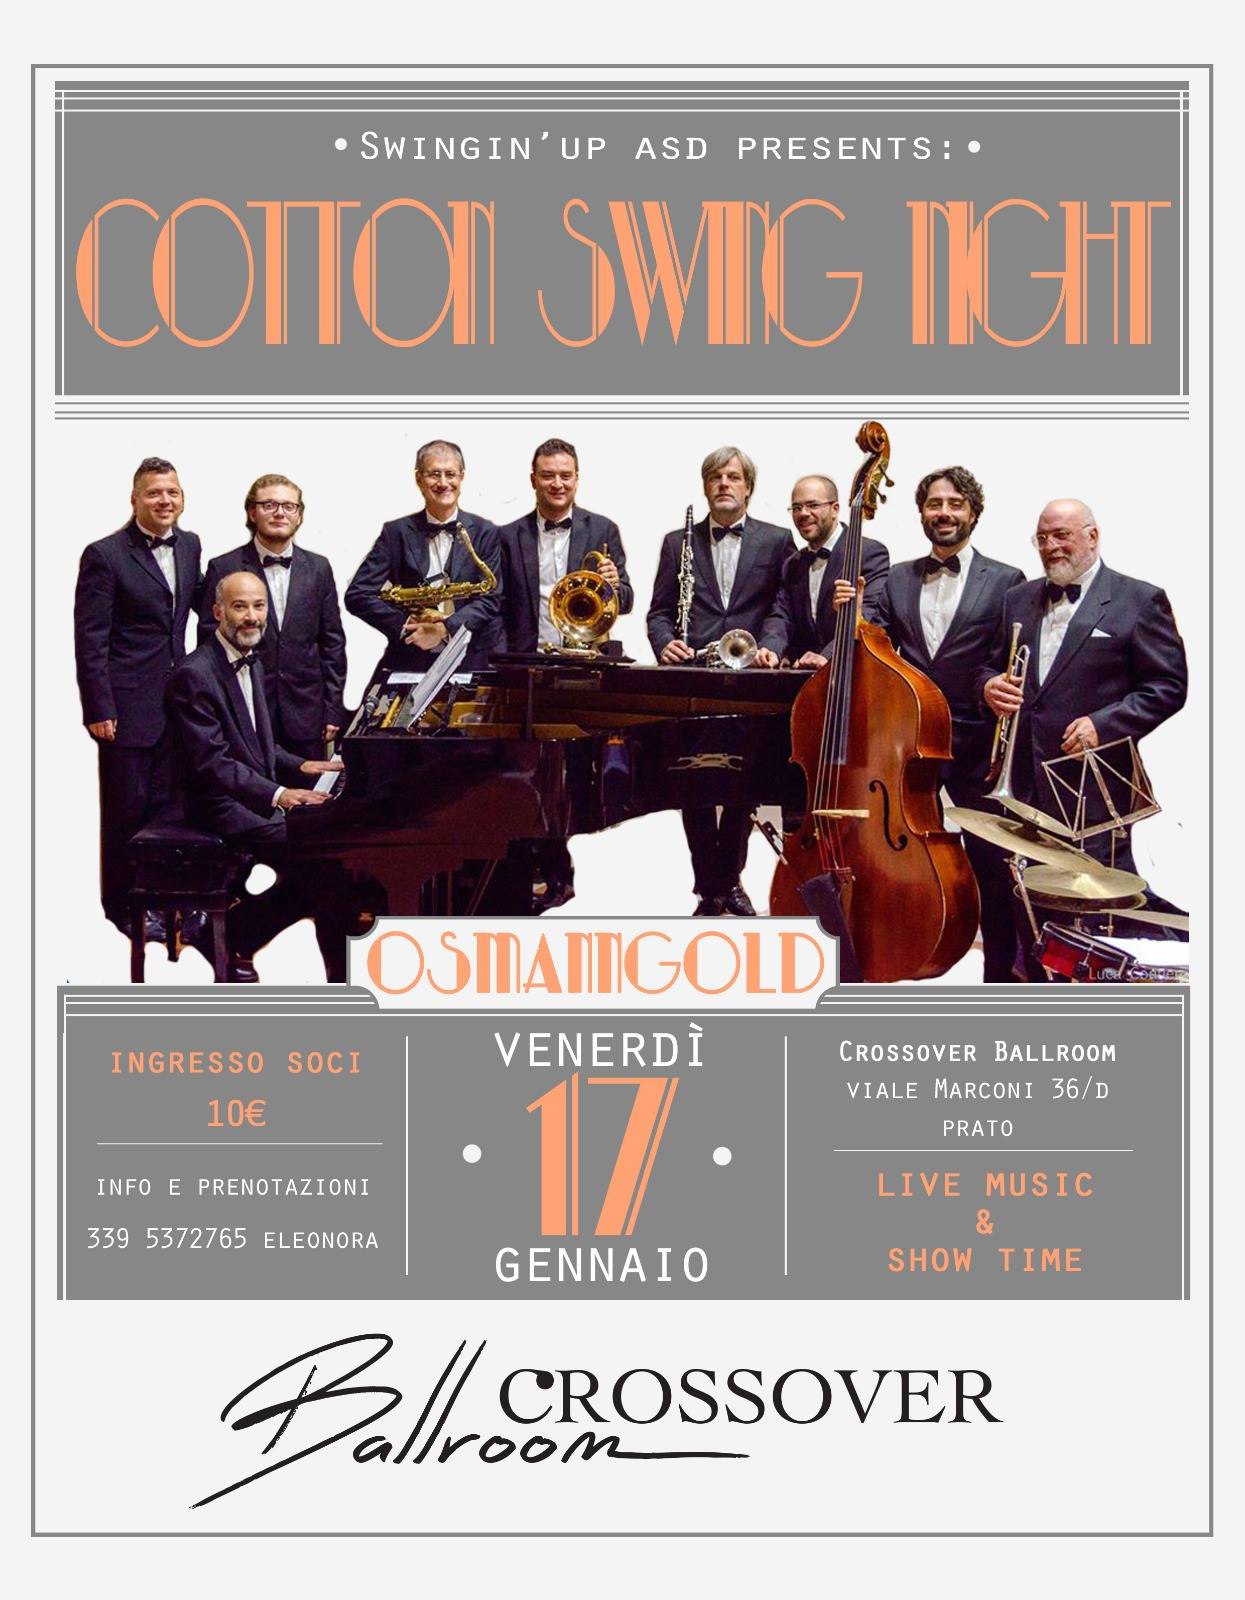 Locandina OsmannGold concerto Cotton Swing Night